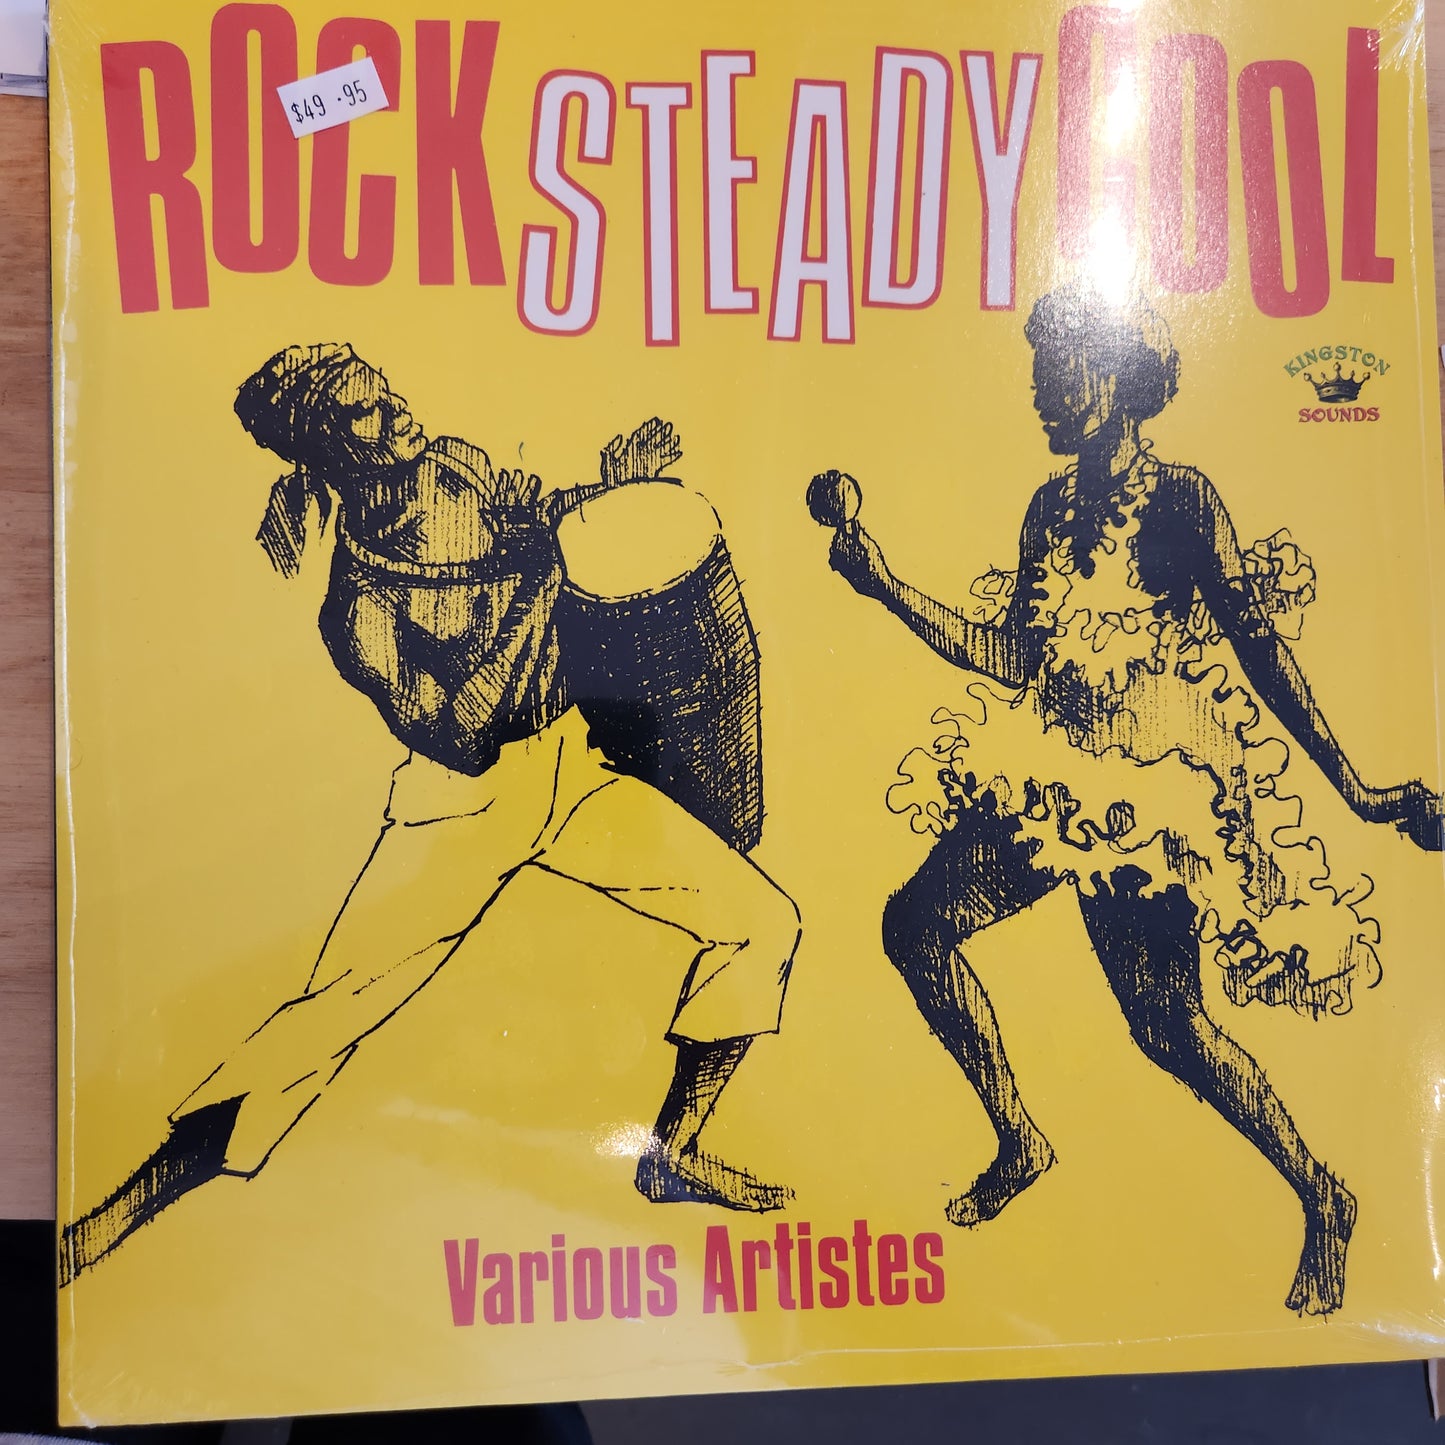 Various Artists - Rocksteady Cool - Vinyl LP